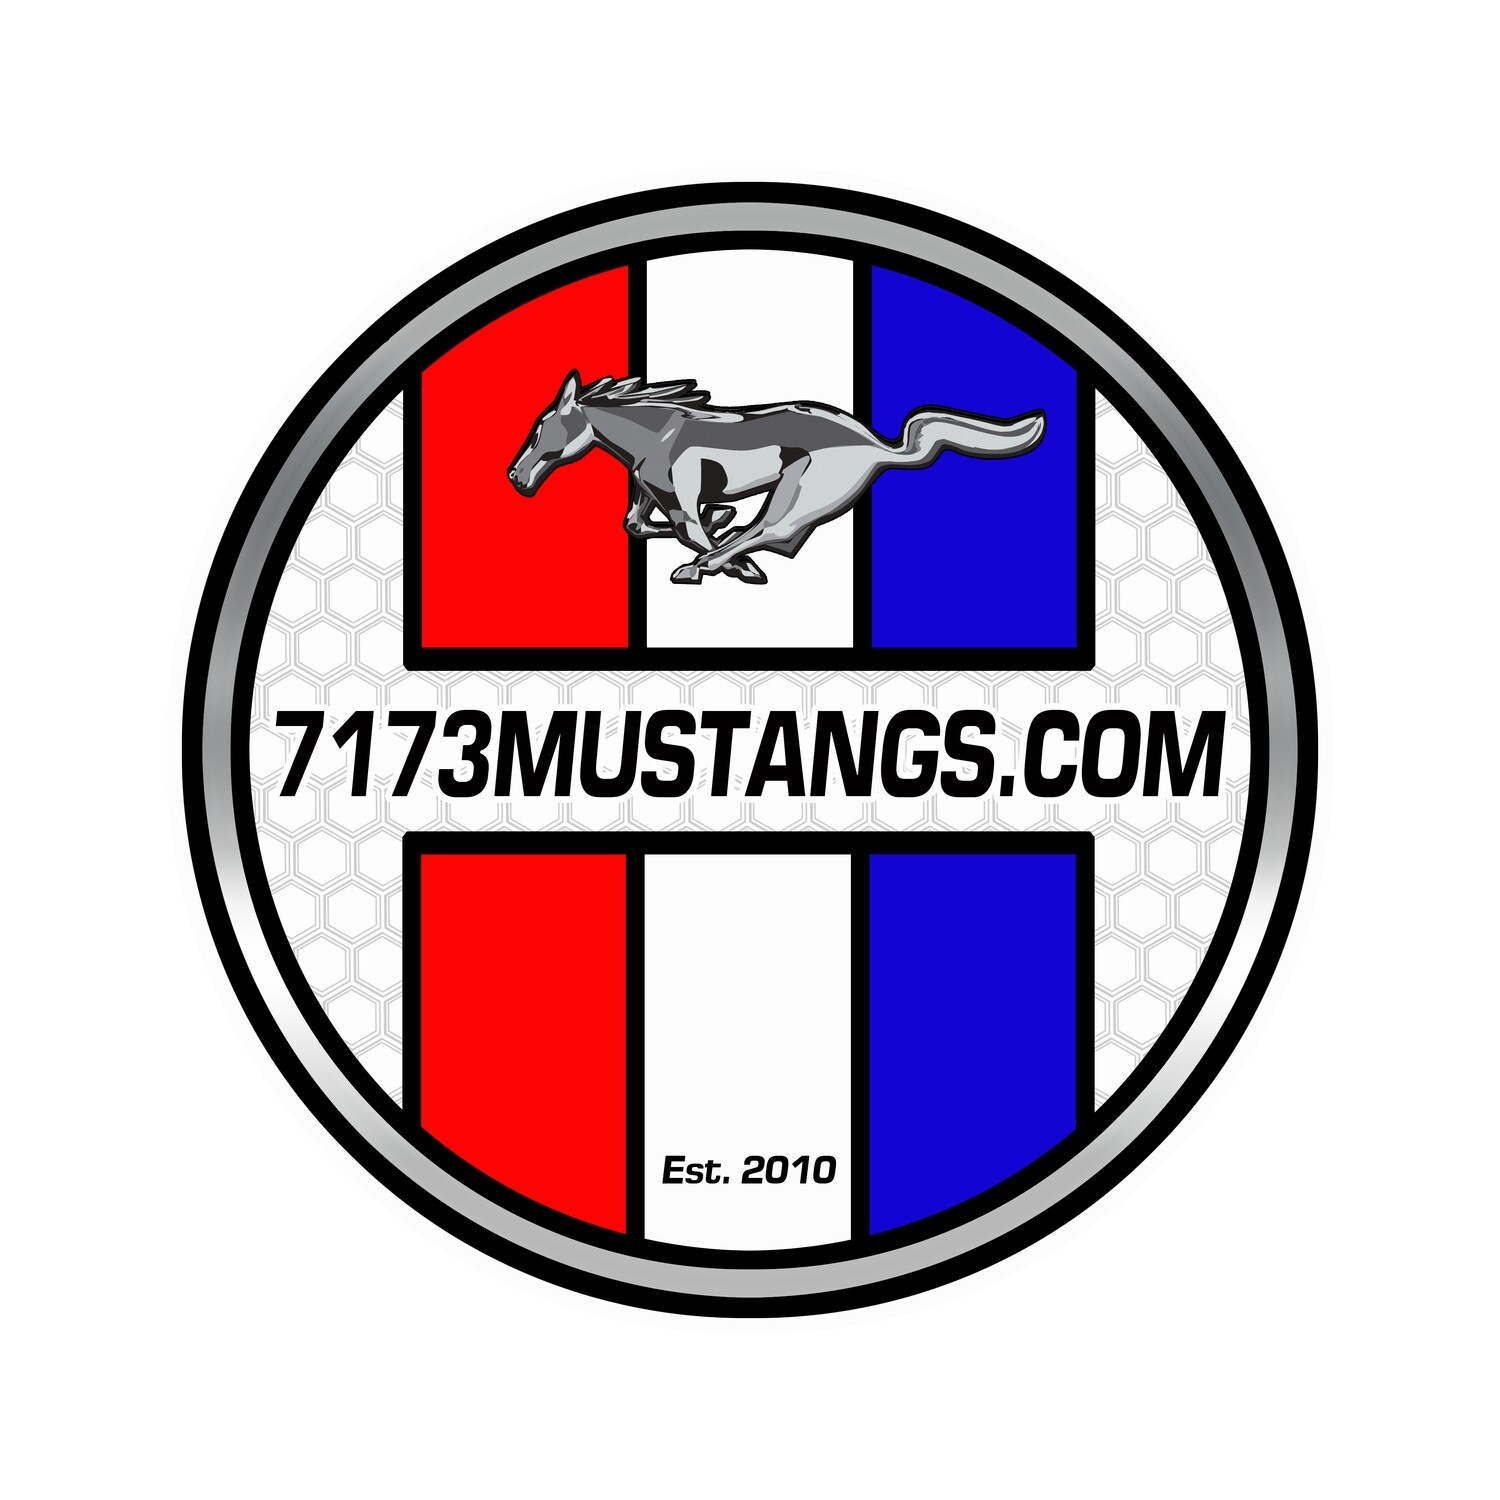 7173Mustangs.com Forum Logo Decal